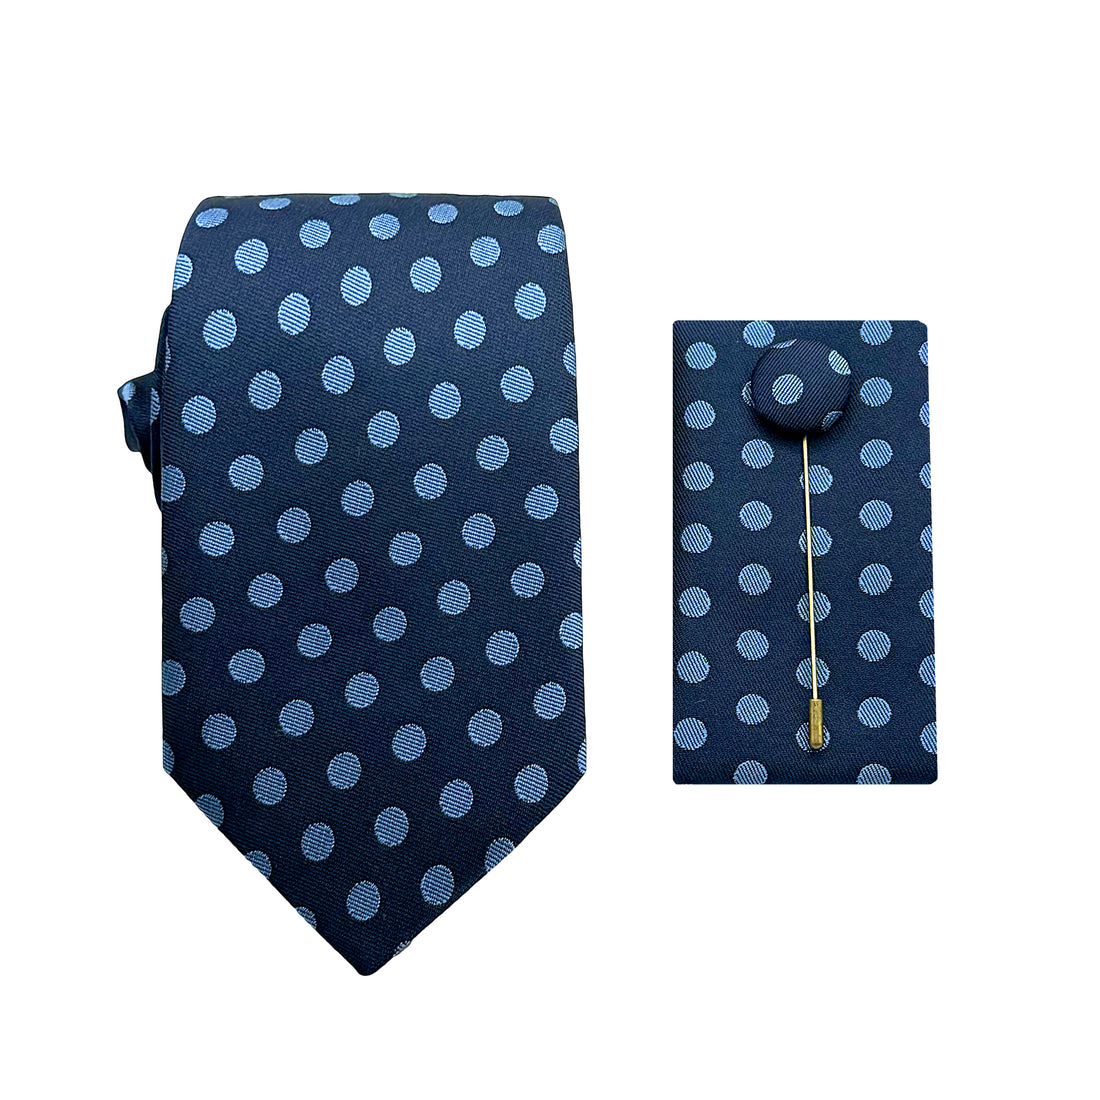 James Adelin Luxury Textured Polka Dot Weave 7.5cm Width Tie/Pocket Square/Lapel Pin Combo Set